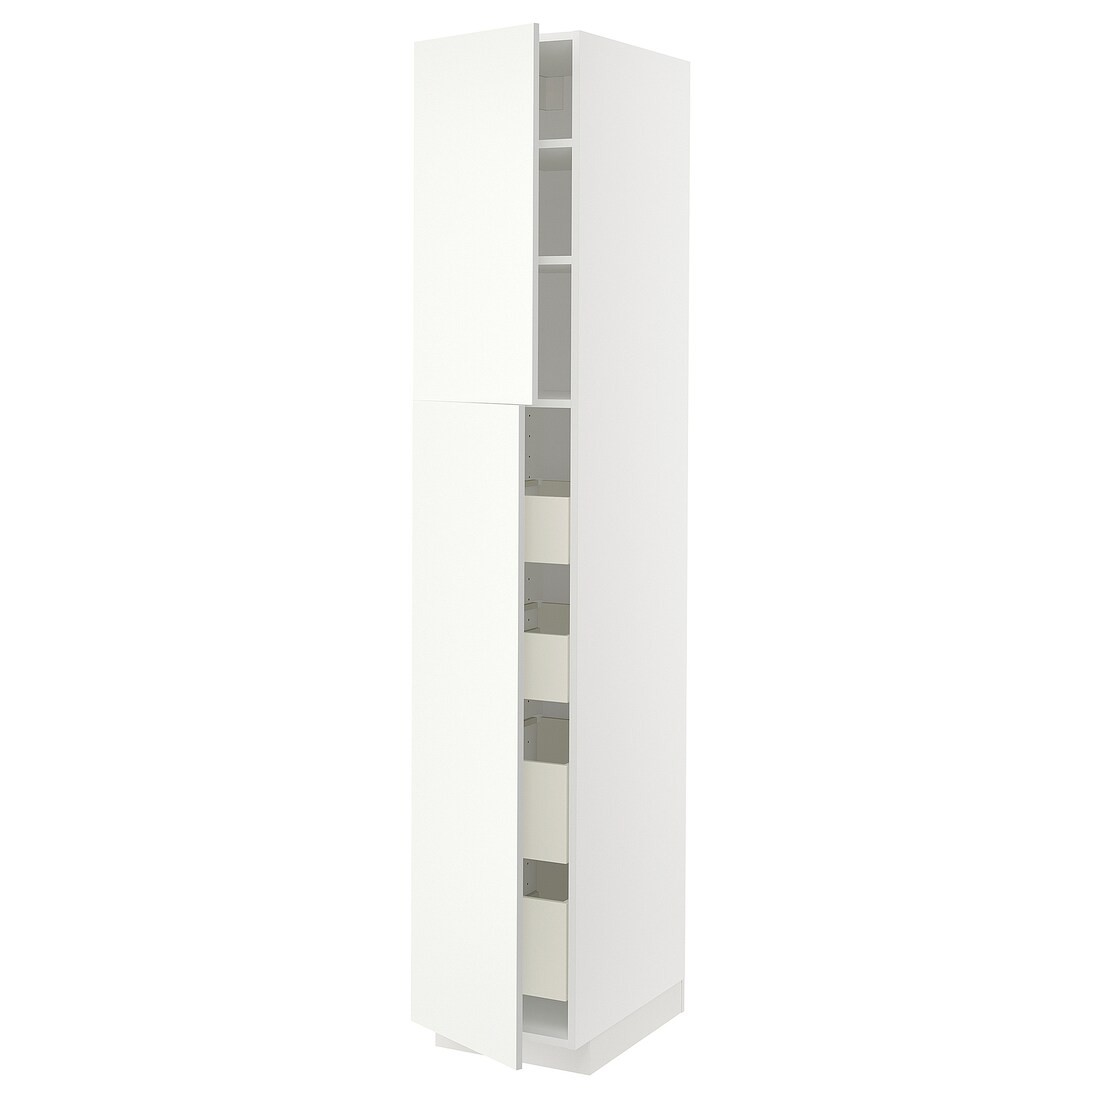 IKEA METOD МЕТОД / MAXIMERA МАКСИМЕРА Шкаф высокий 2 двери / 4 ящика, белый / Vallstena белый 09507429 095.074.29